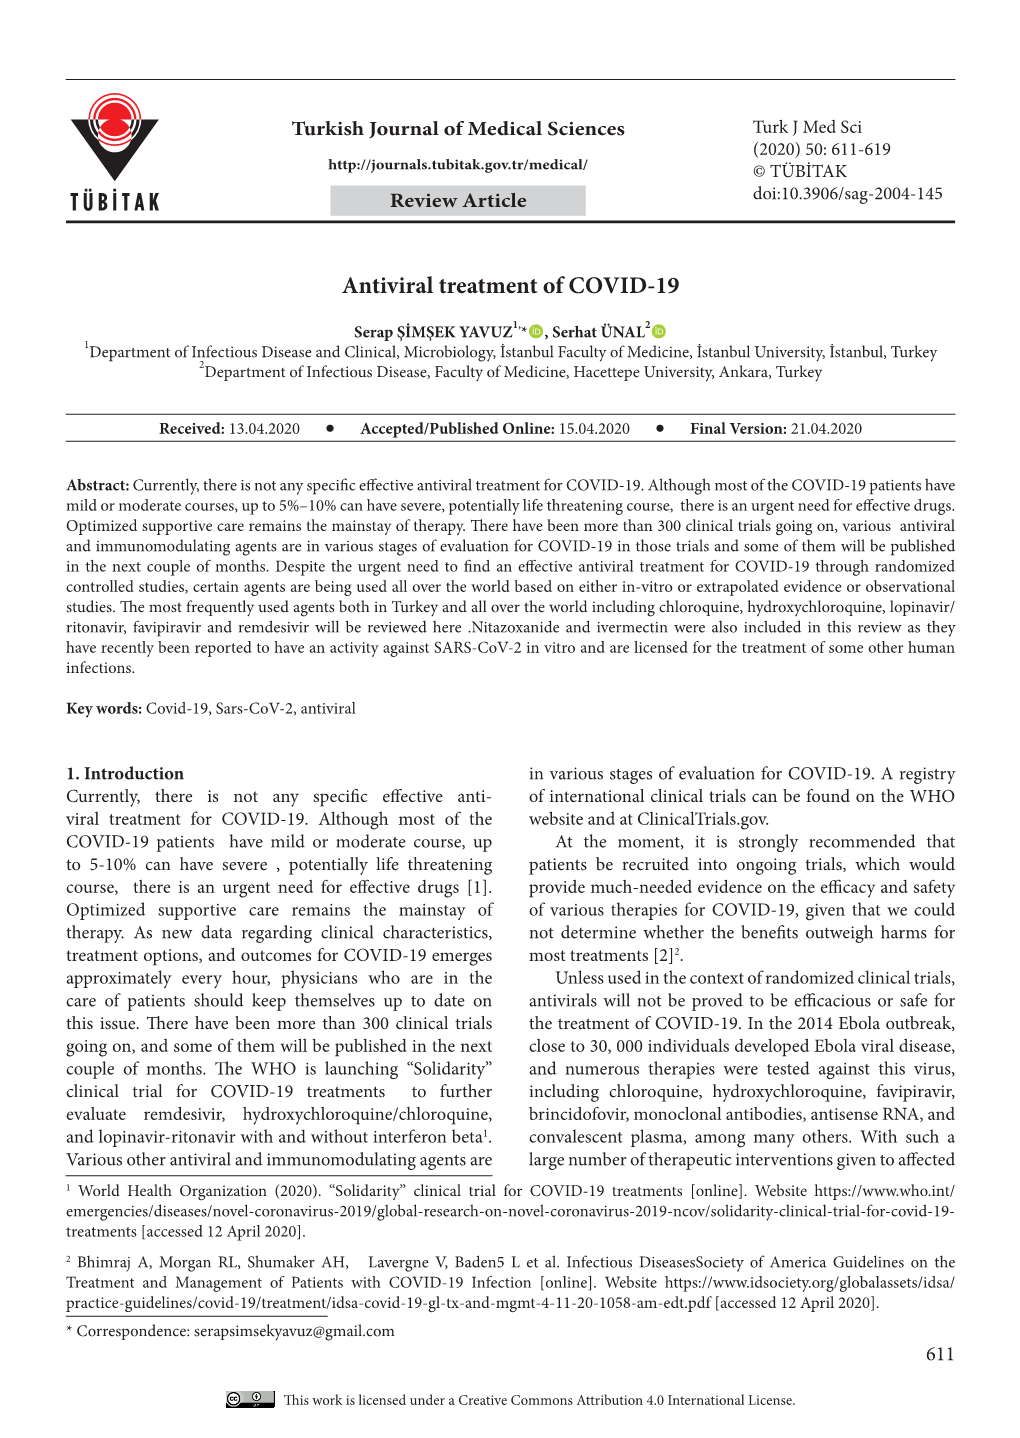 Antiviral Treatment of COVID-19